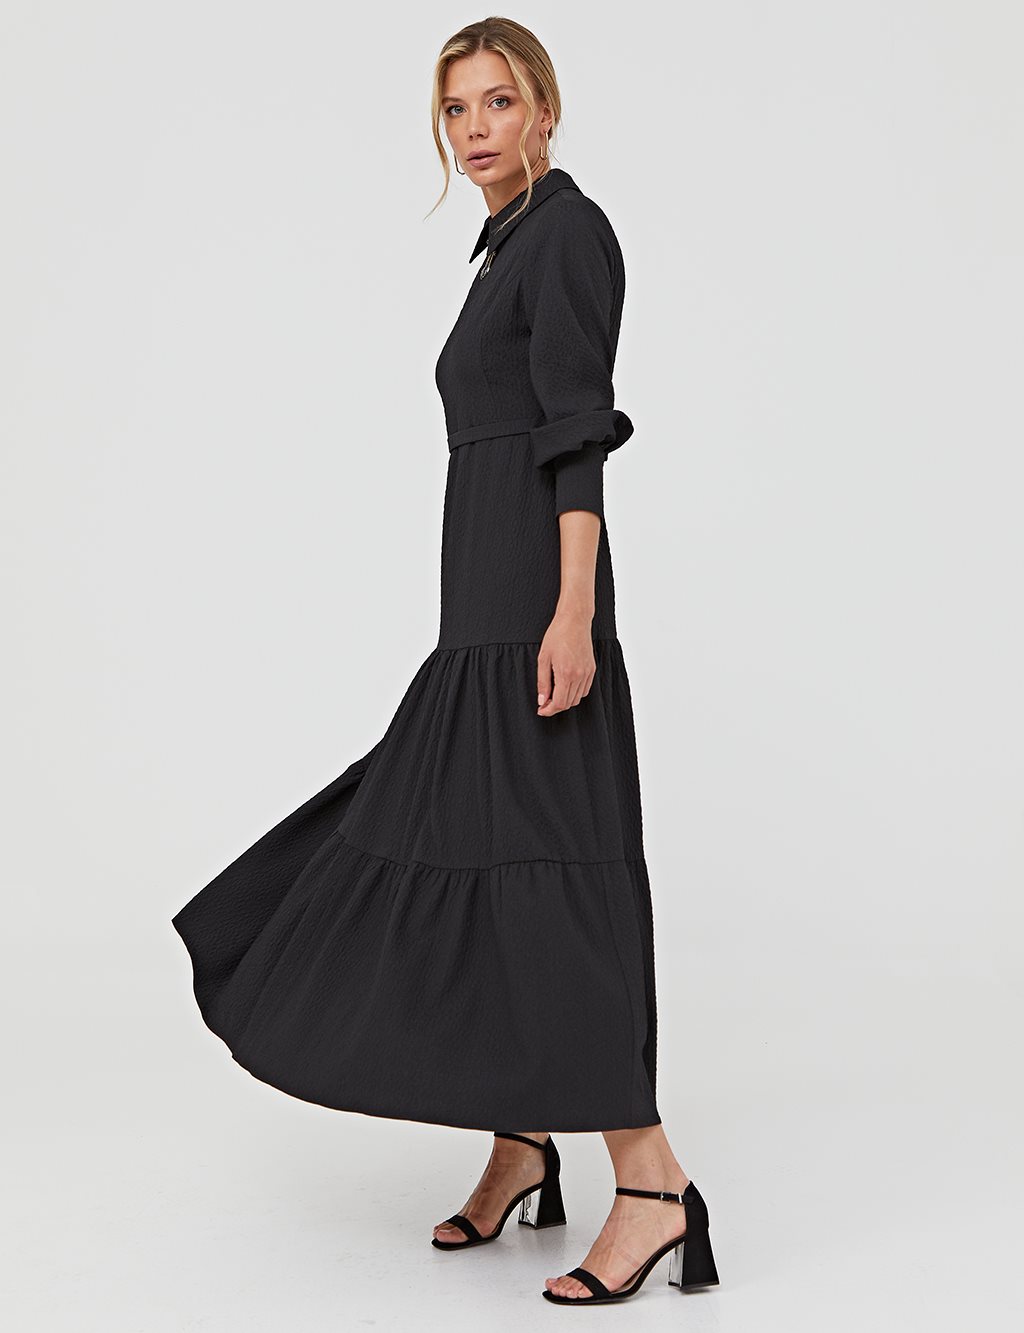 Skirt Part Brooch Dress Black